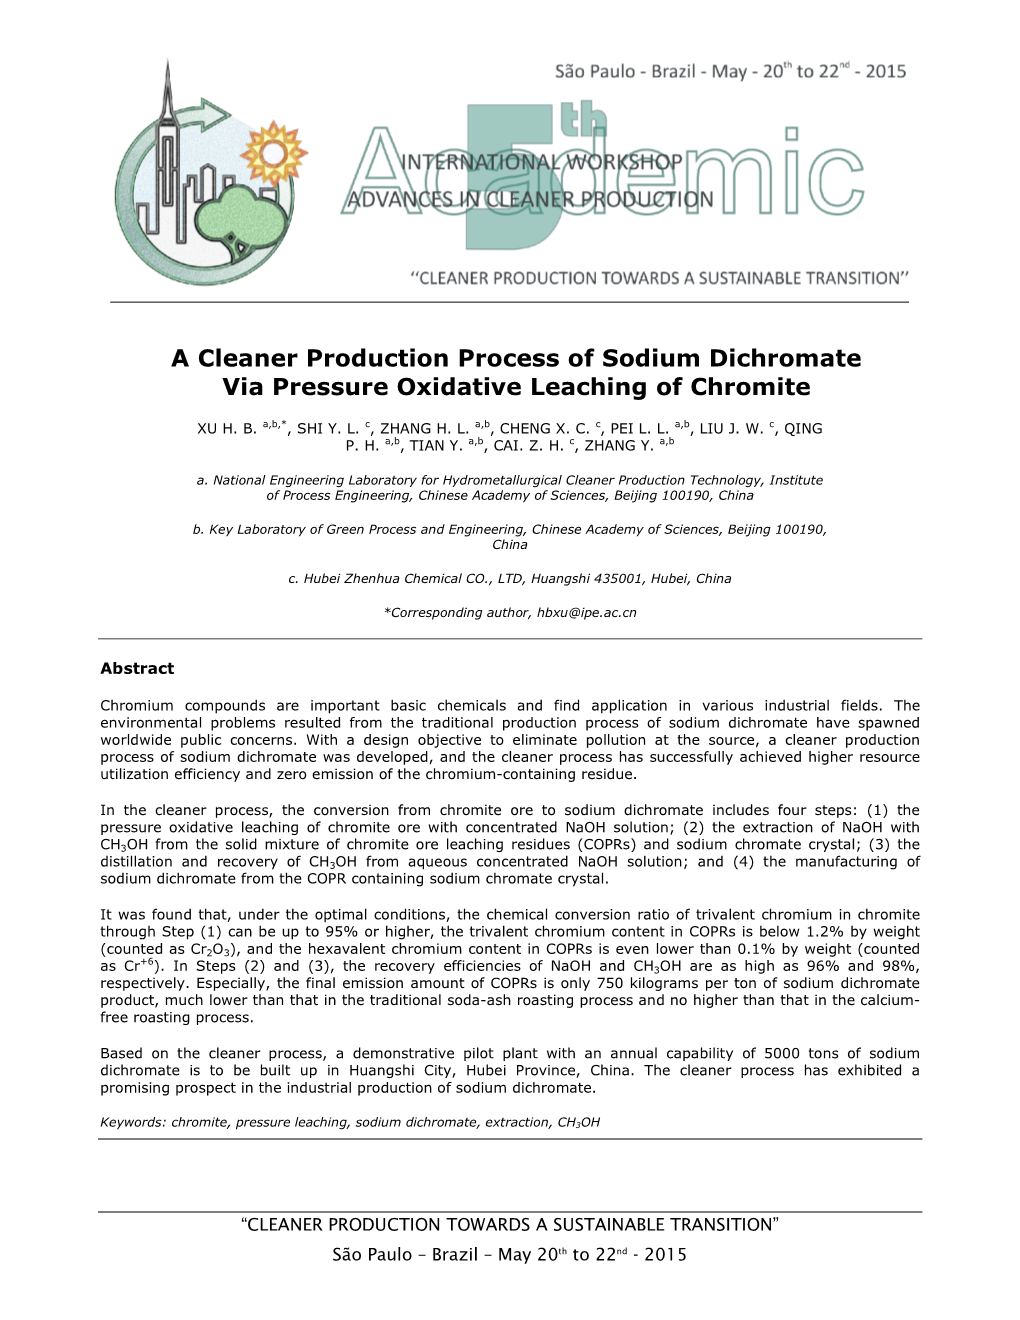 A Cleaner Production Process of Sodium Dichromate Via Pressure Oxidative Leaching of Chromite